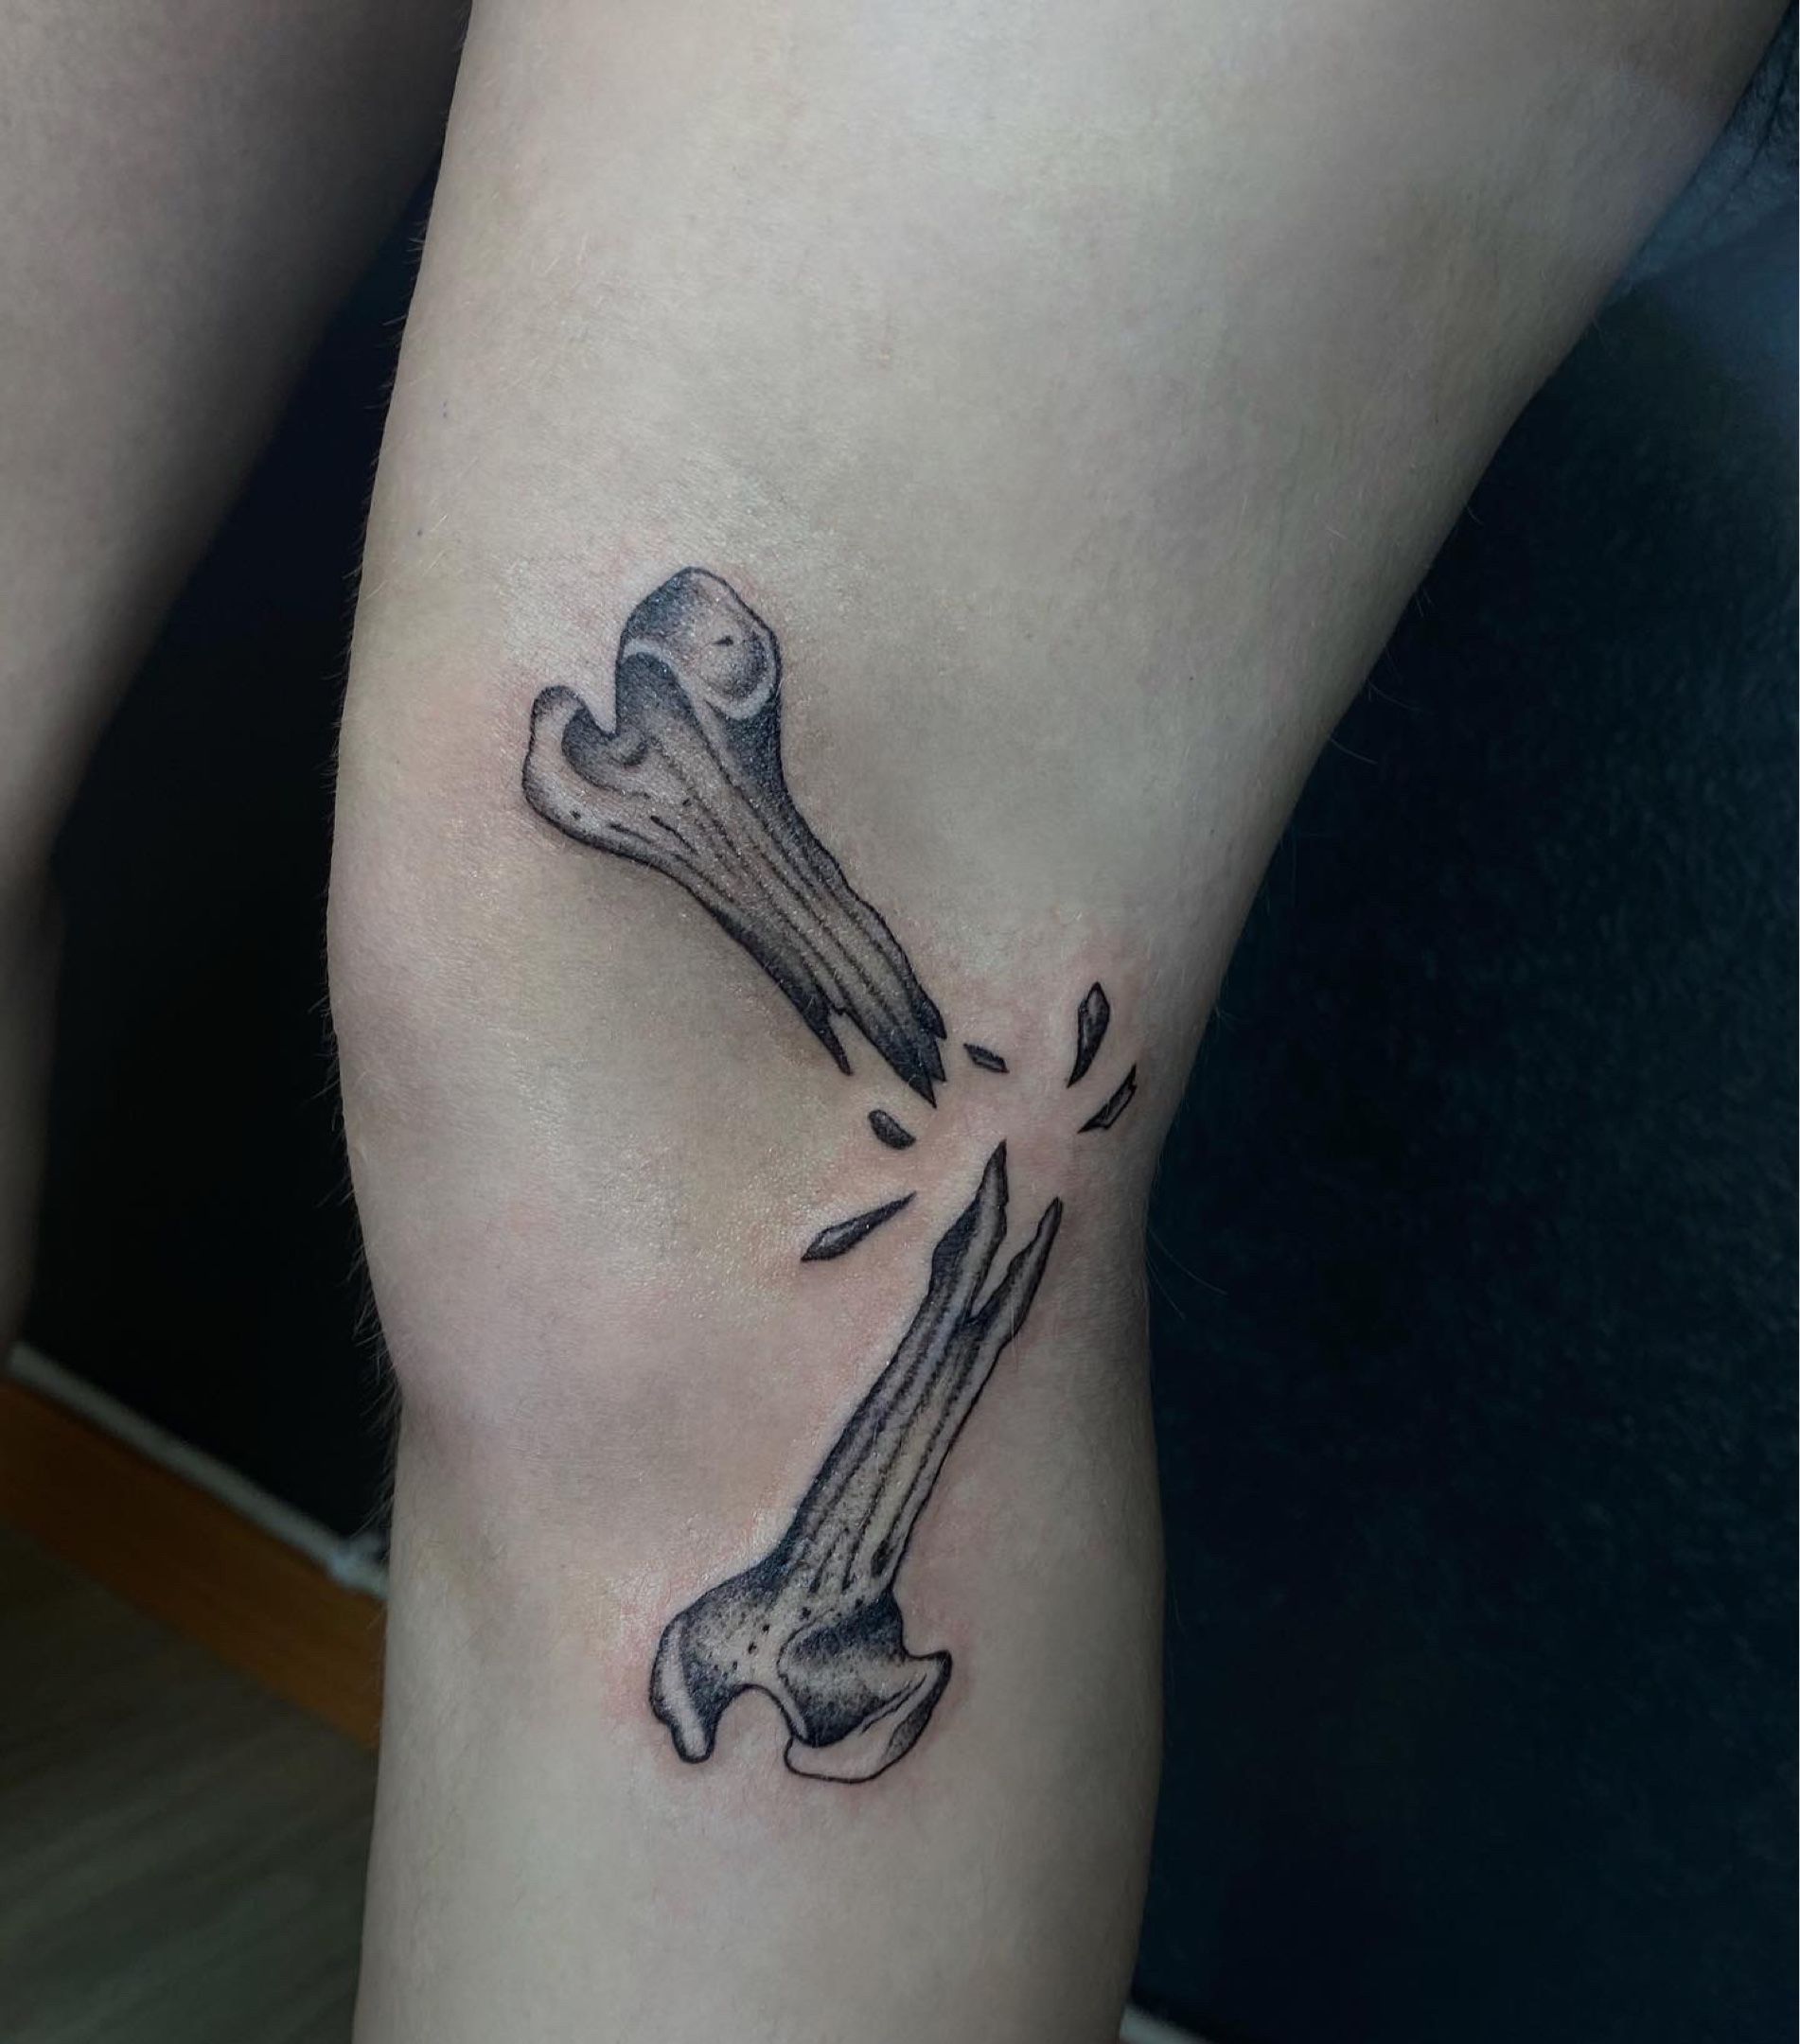 Tattoo uploaded by Tattoodo • Foot tattoo by Brent Boller #BrentBoller  #foottattoo #foottattoos #foot #feet #skeleton #bones #traditional •  Tattoodo